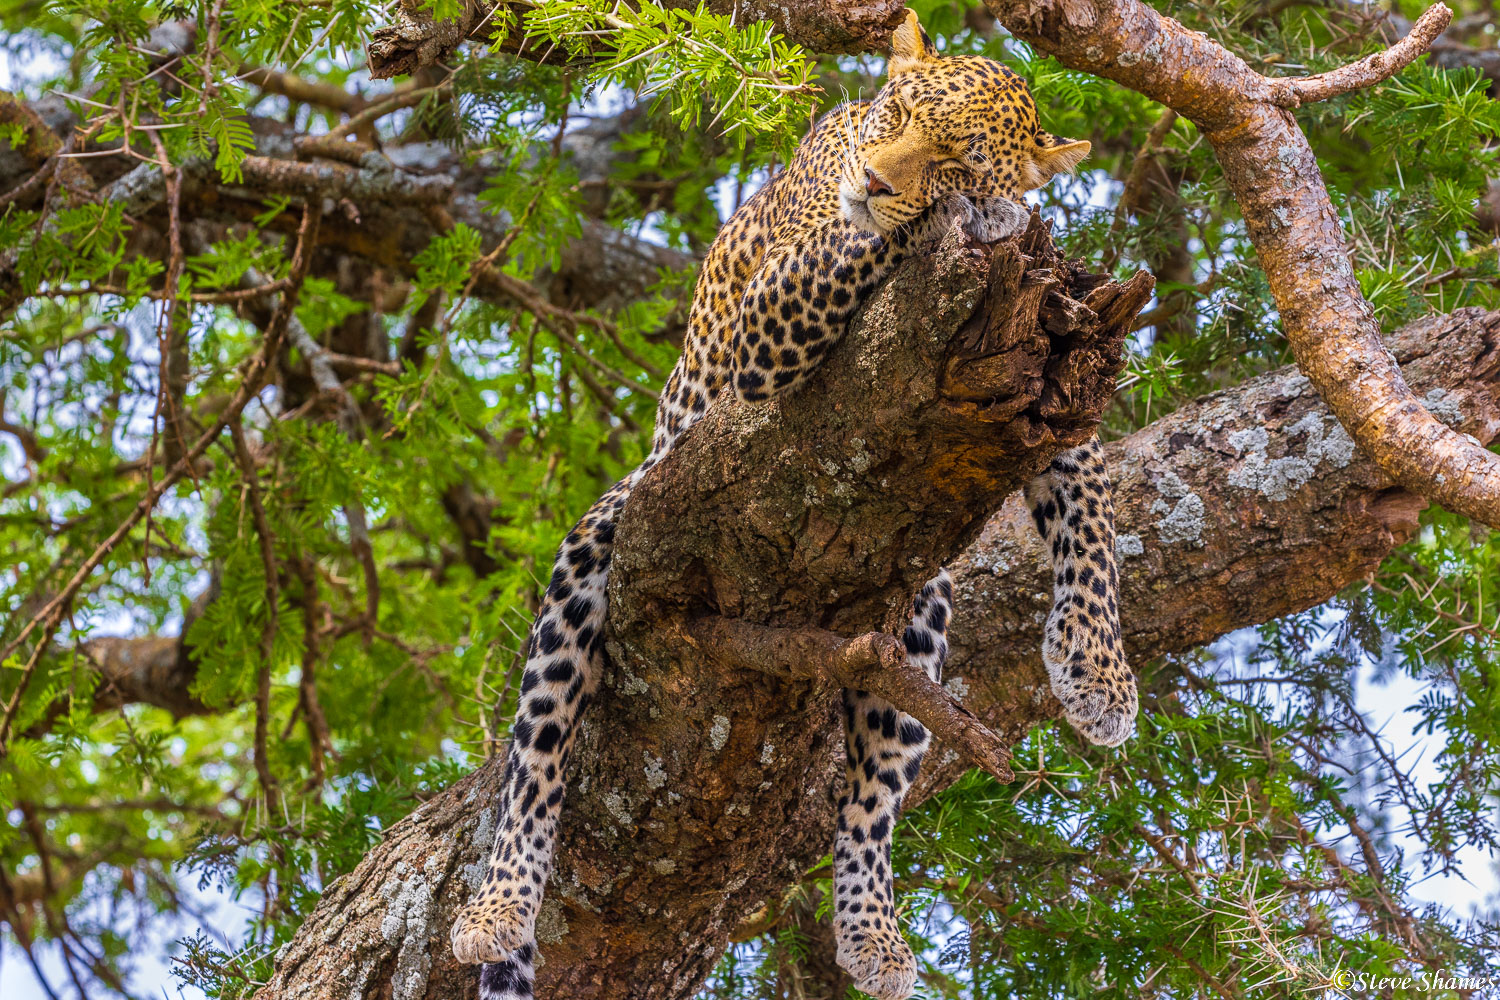 Leopard sprawled out on a tree limb getting some sleep.